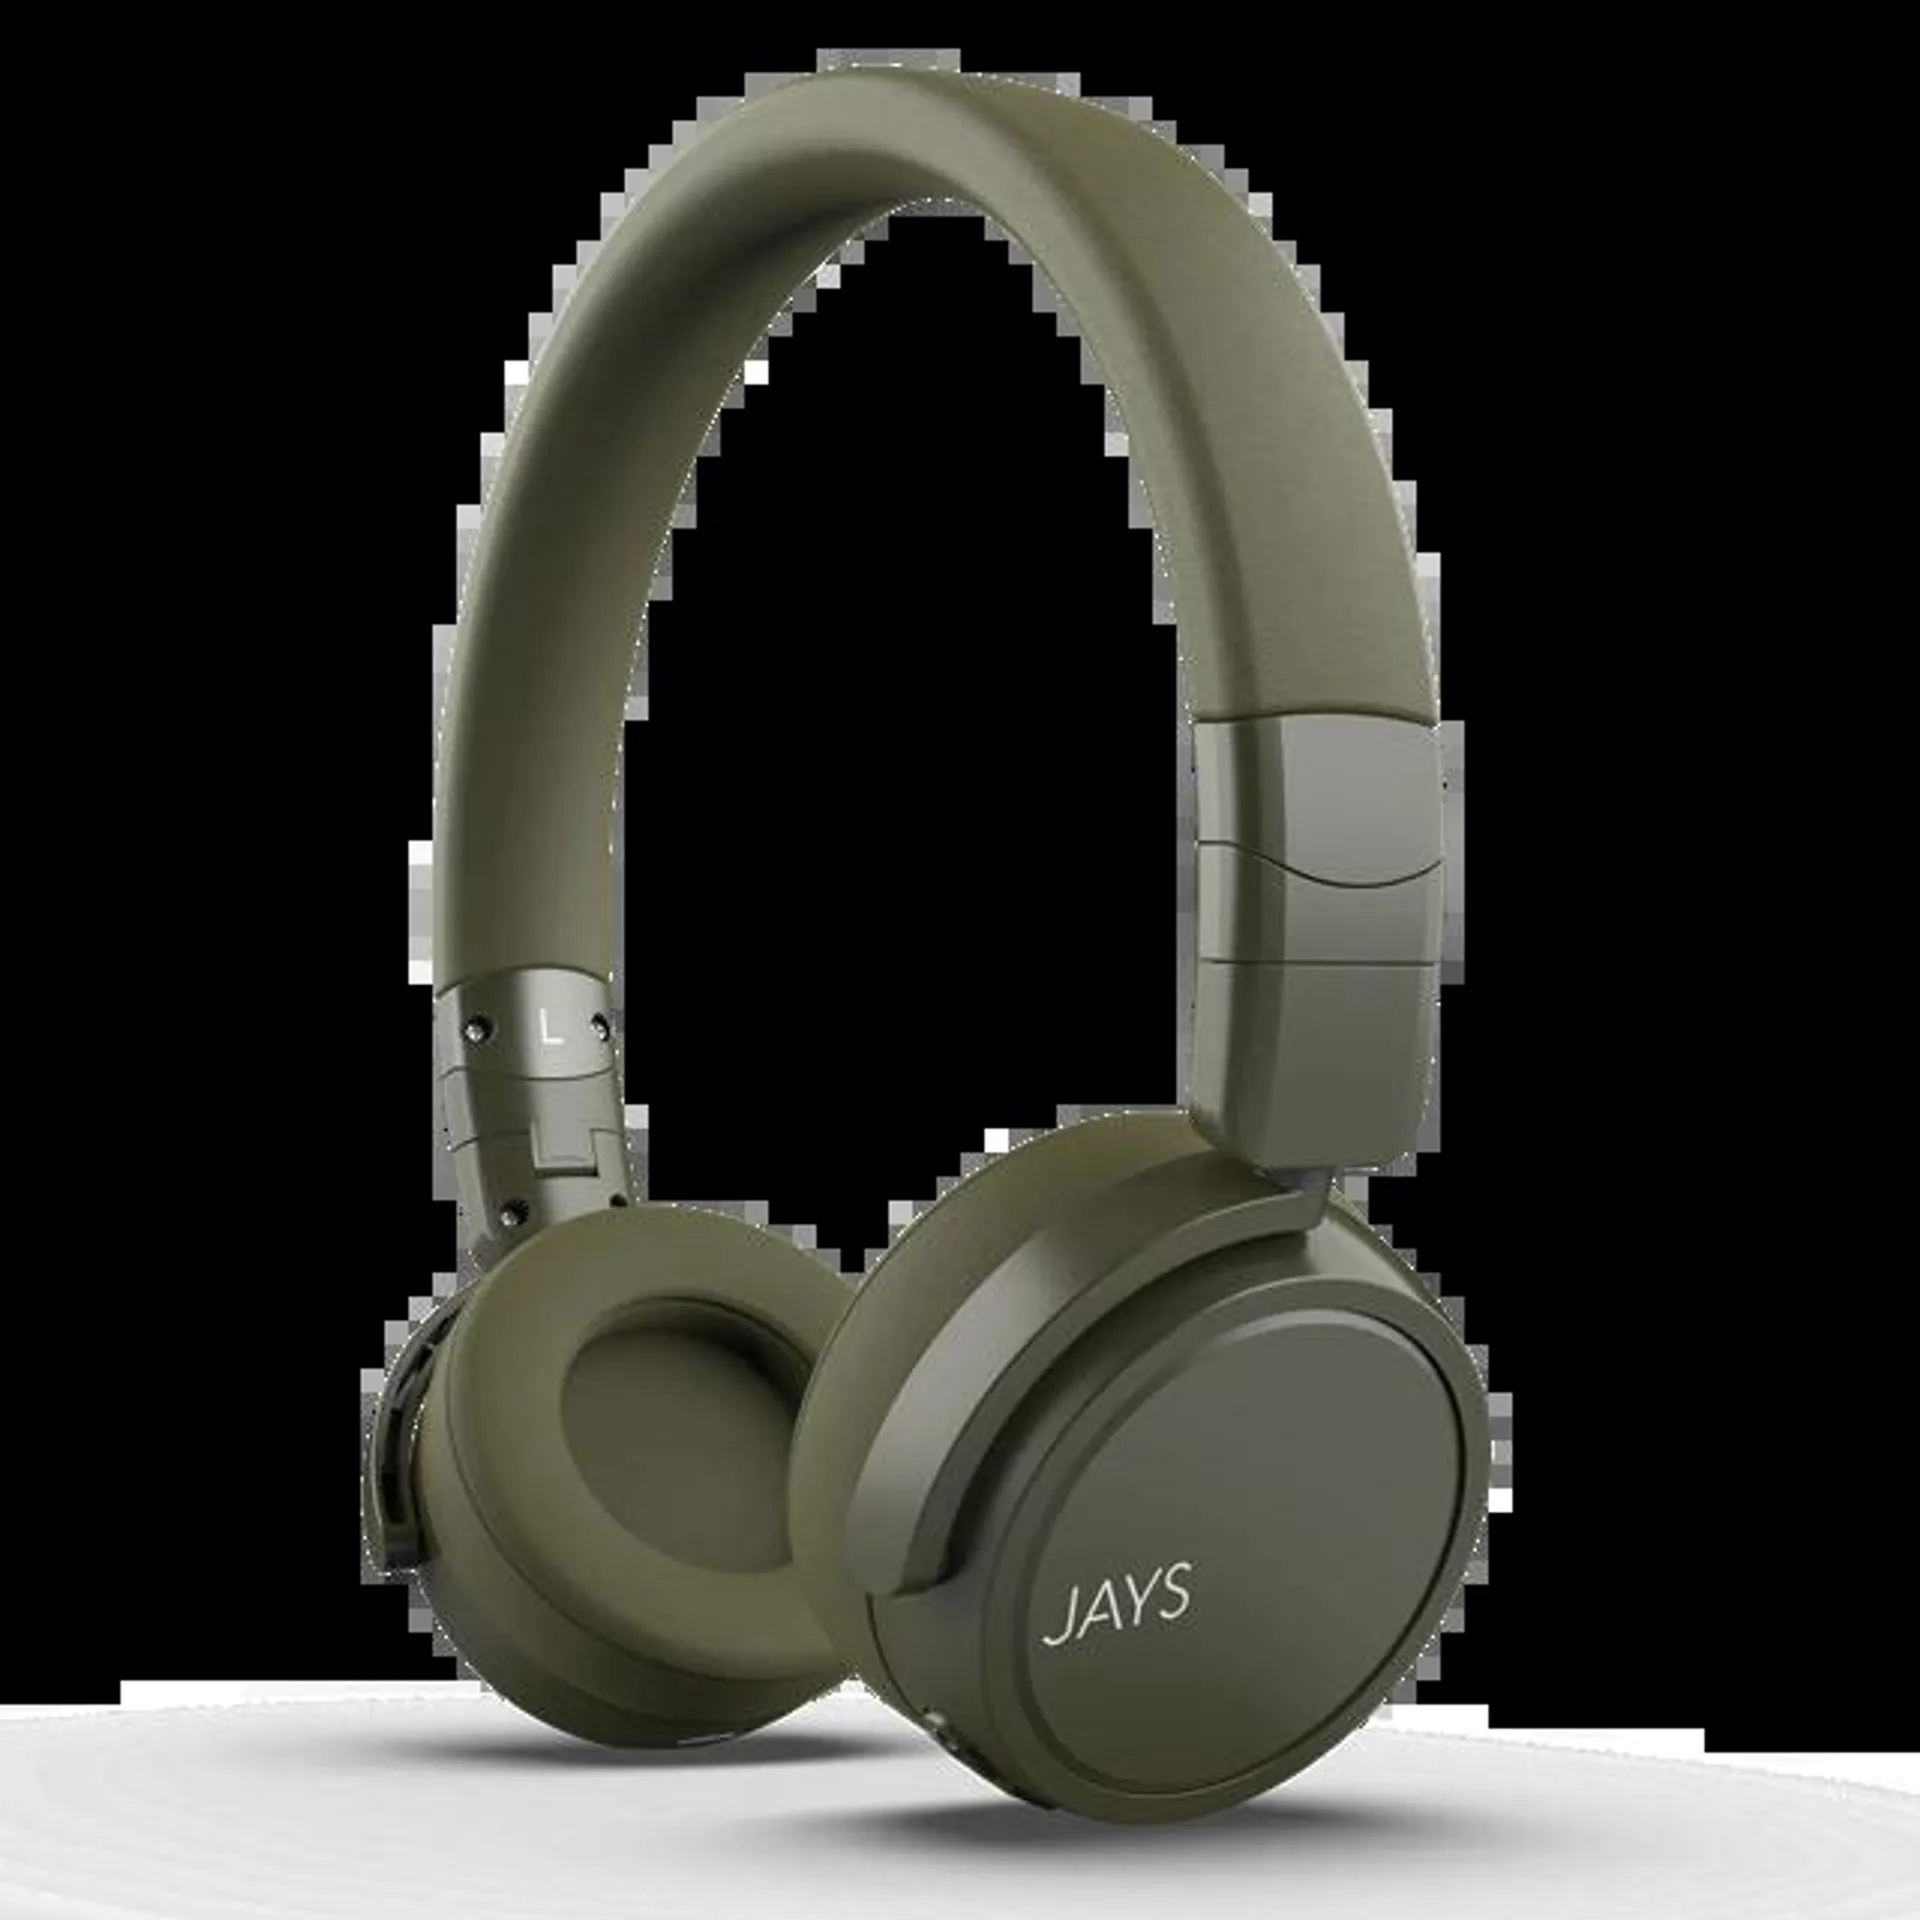 Jays x-Seven Green Bluetooth Headphones